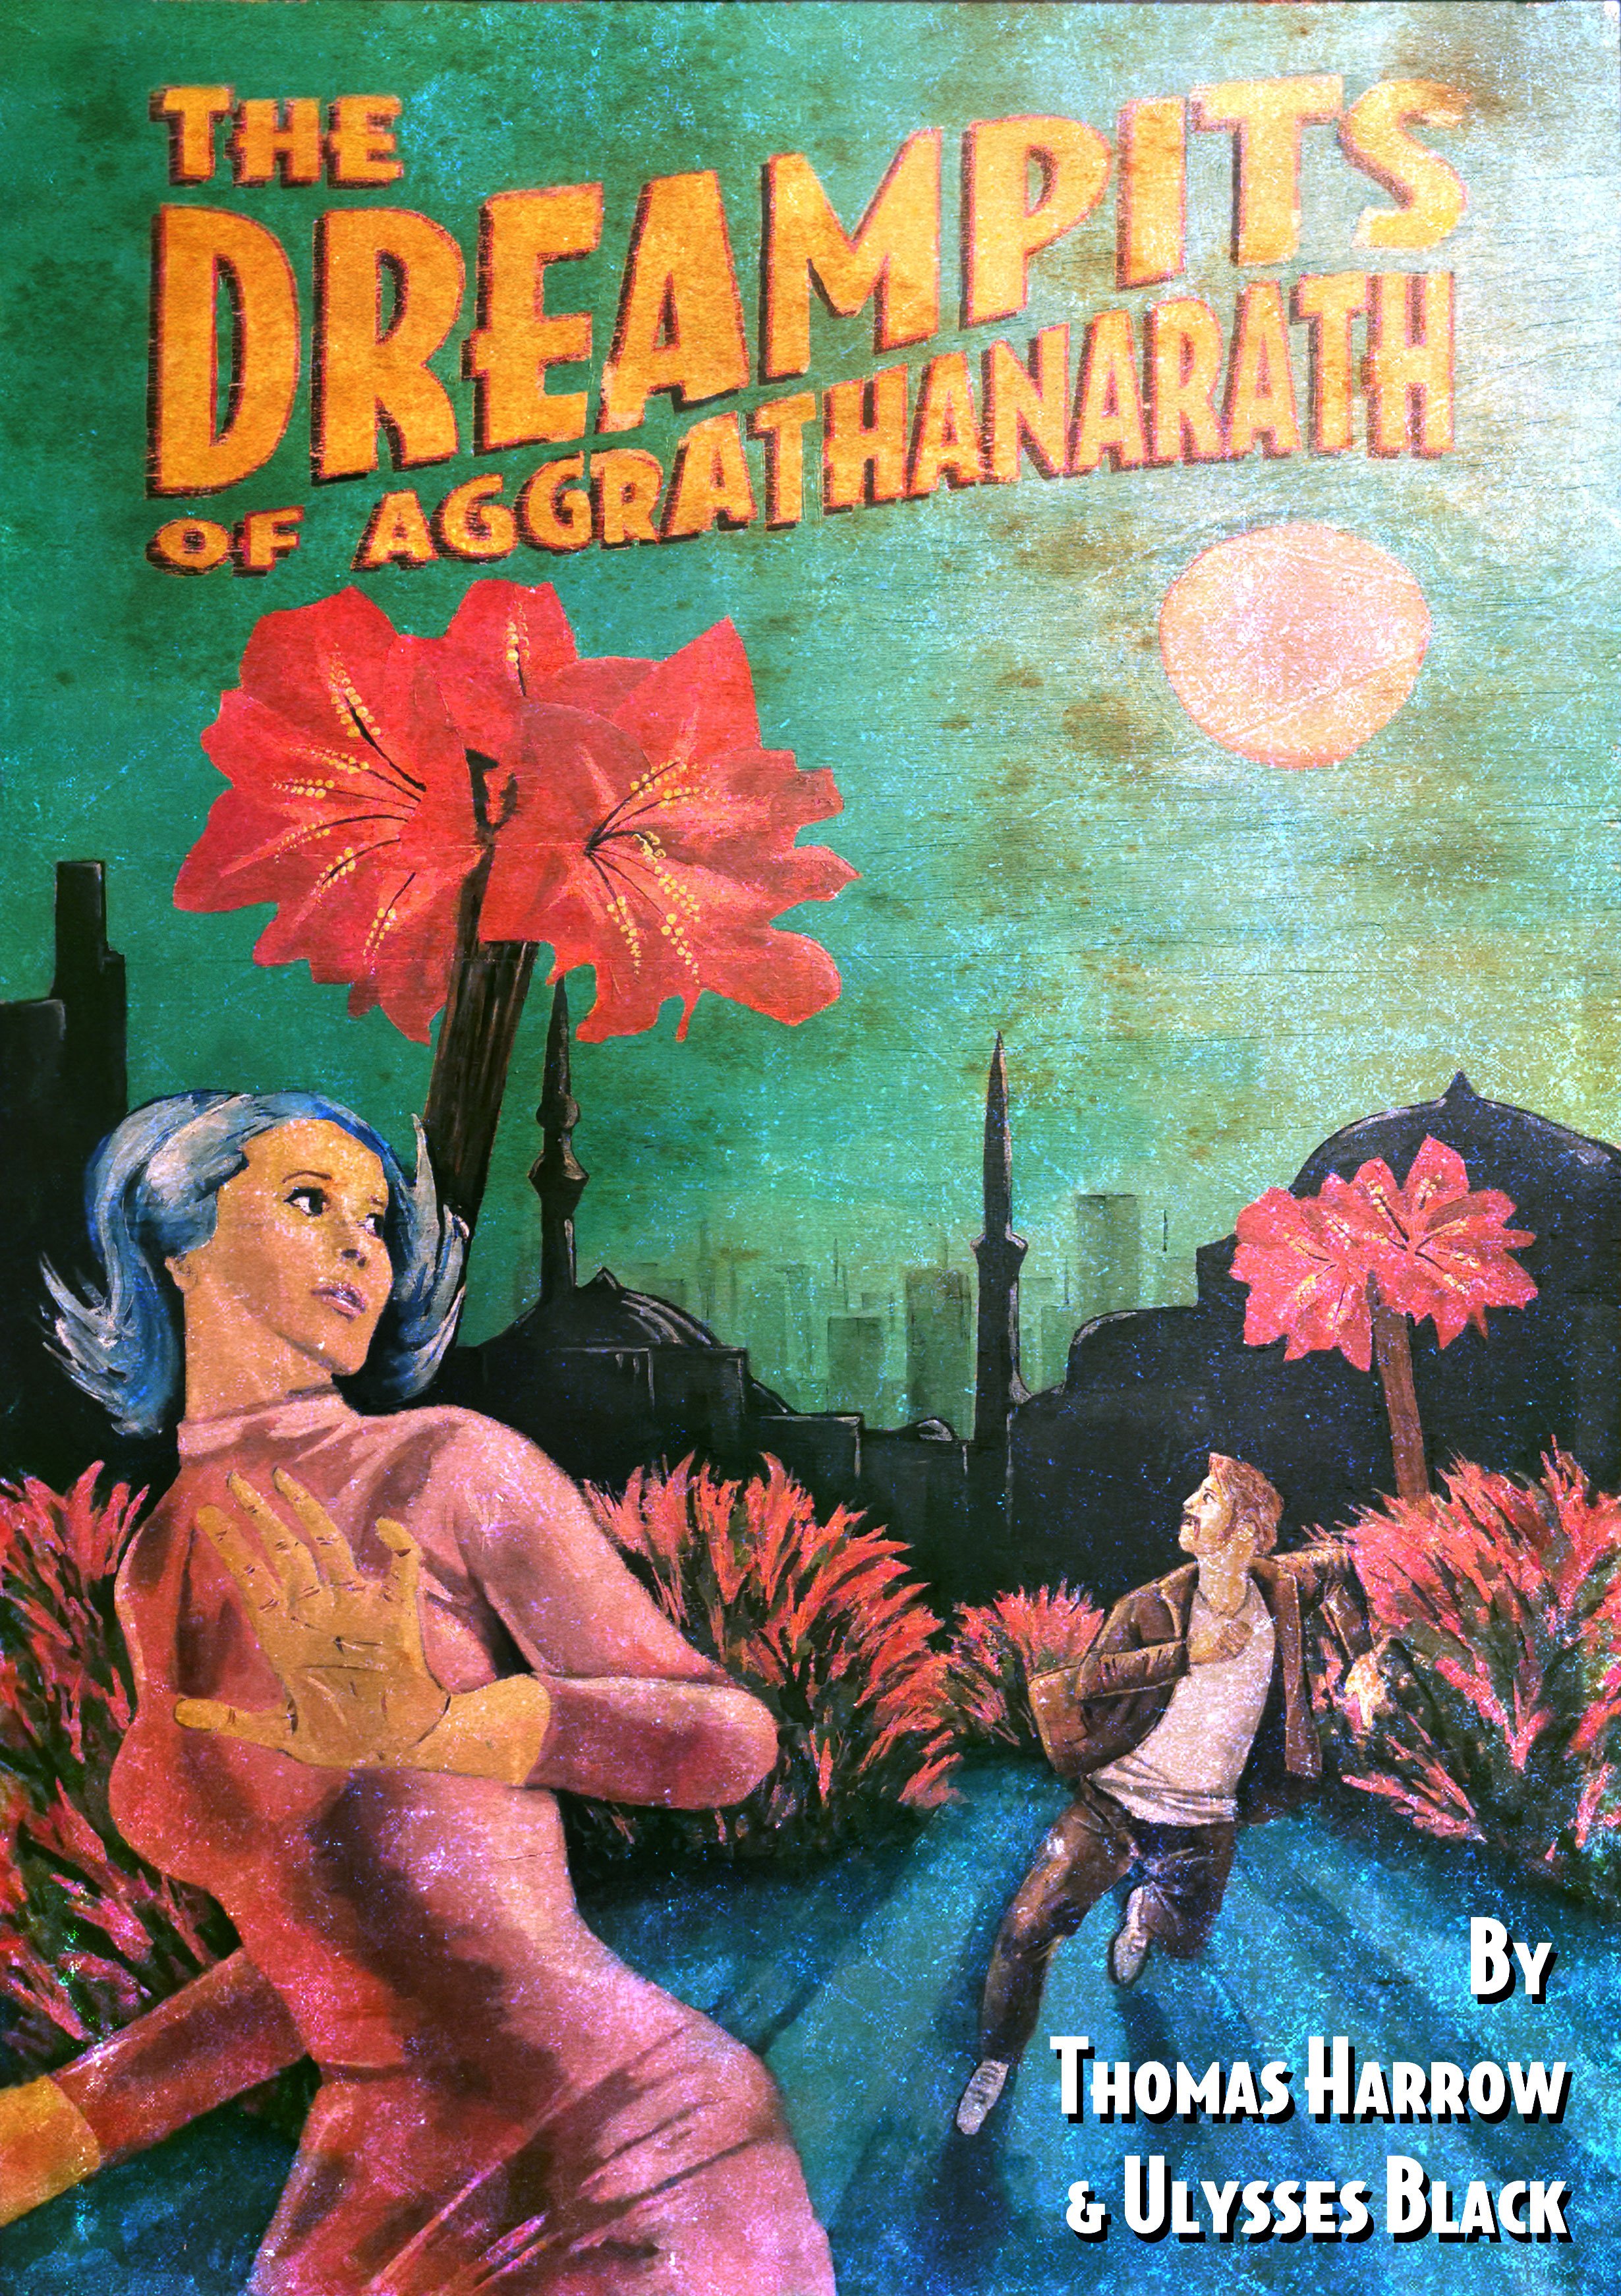 2020: The Dreampits of Aggrathanarath